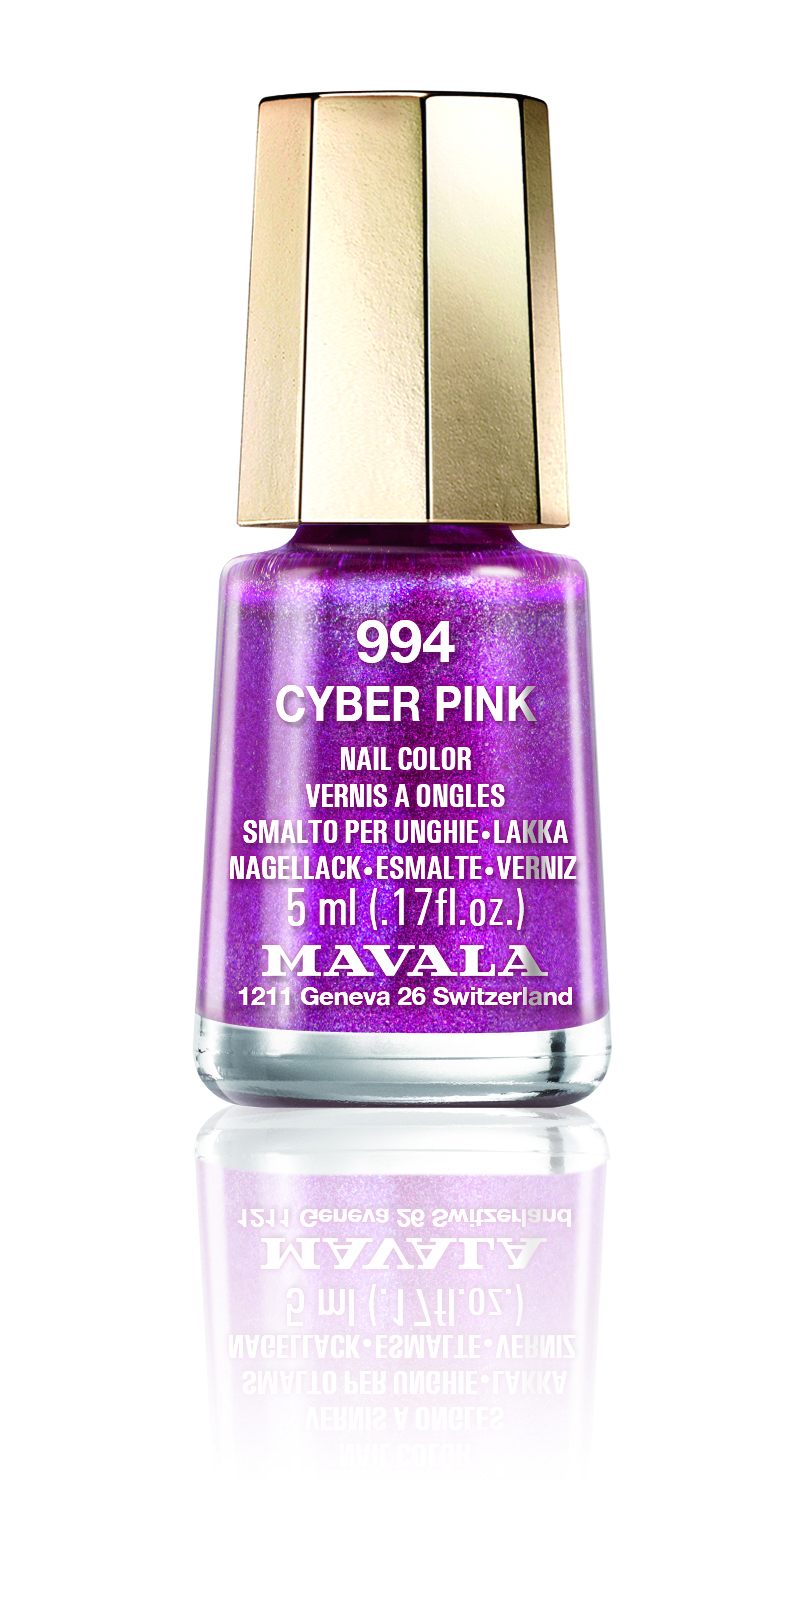 Mavala Cyber Pink nail polish